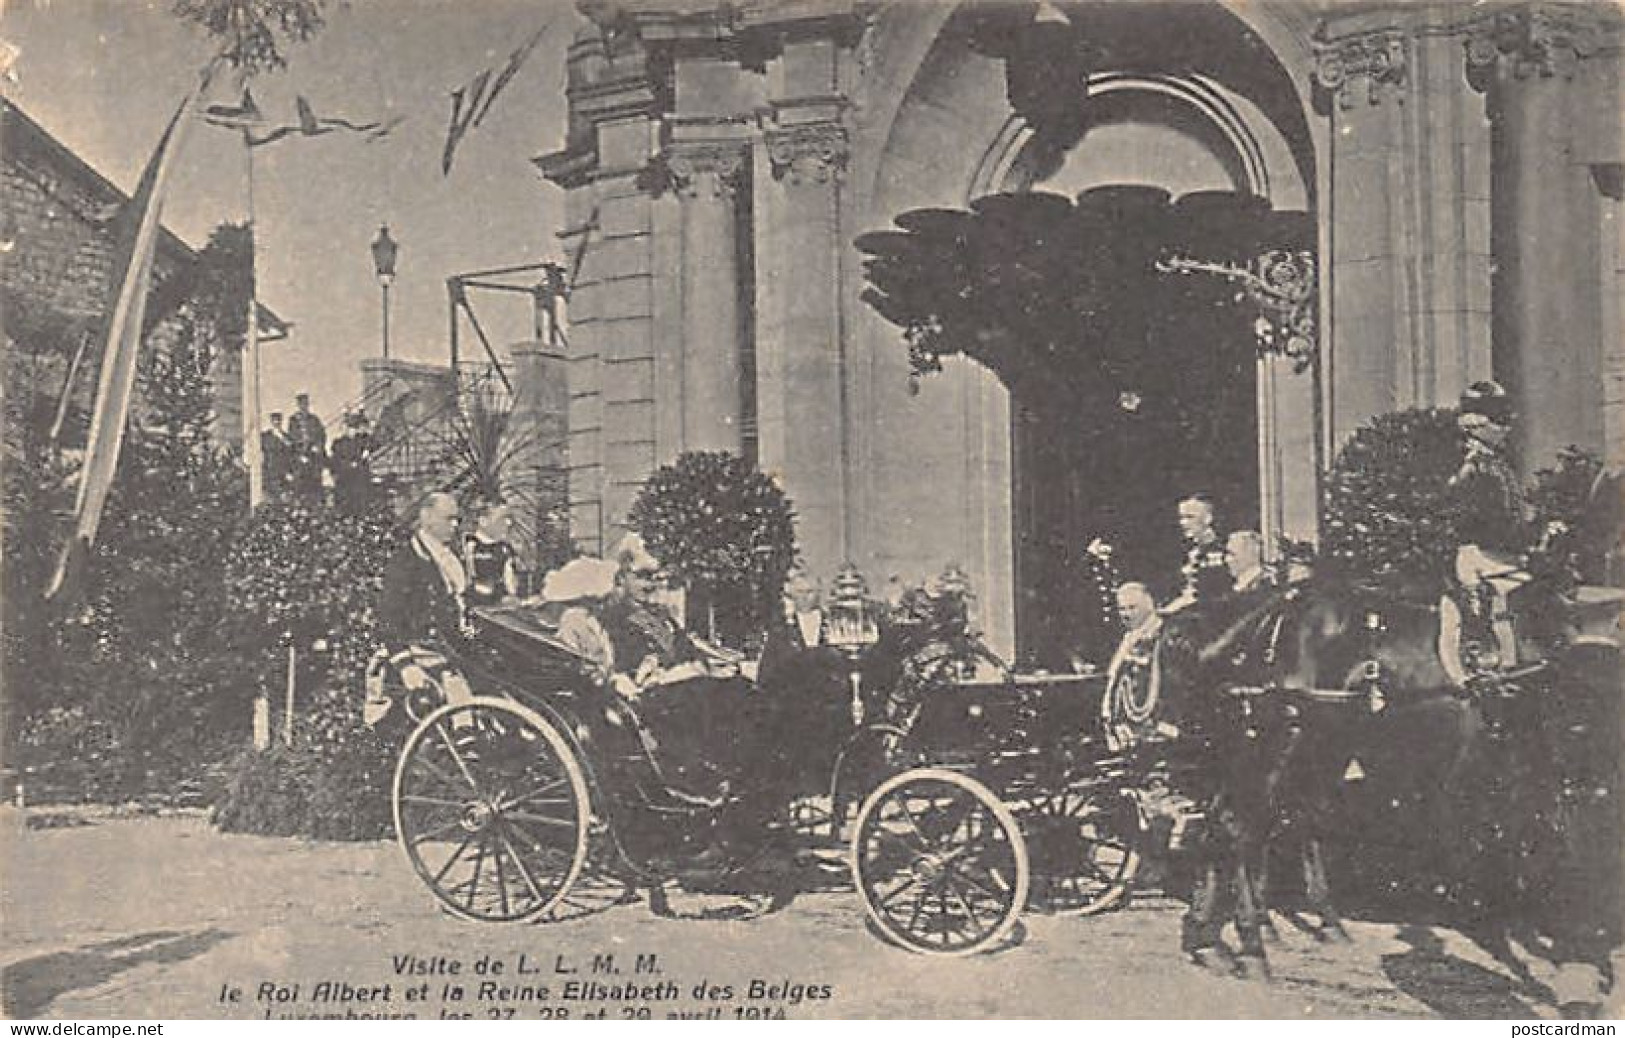 LUXEMBOURG - VILLE - Visite Du Roi Albert Des Belges Les 27, 28 & 29 Avril 1914  - Luxemburg - Stad